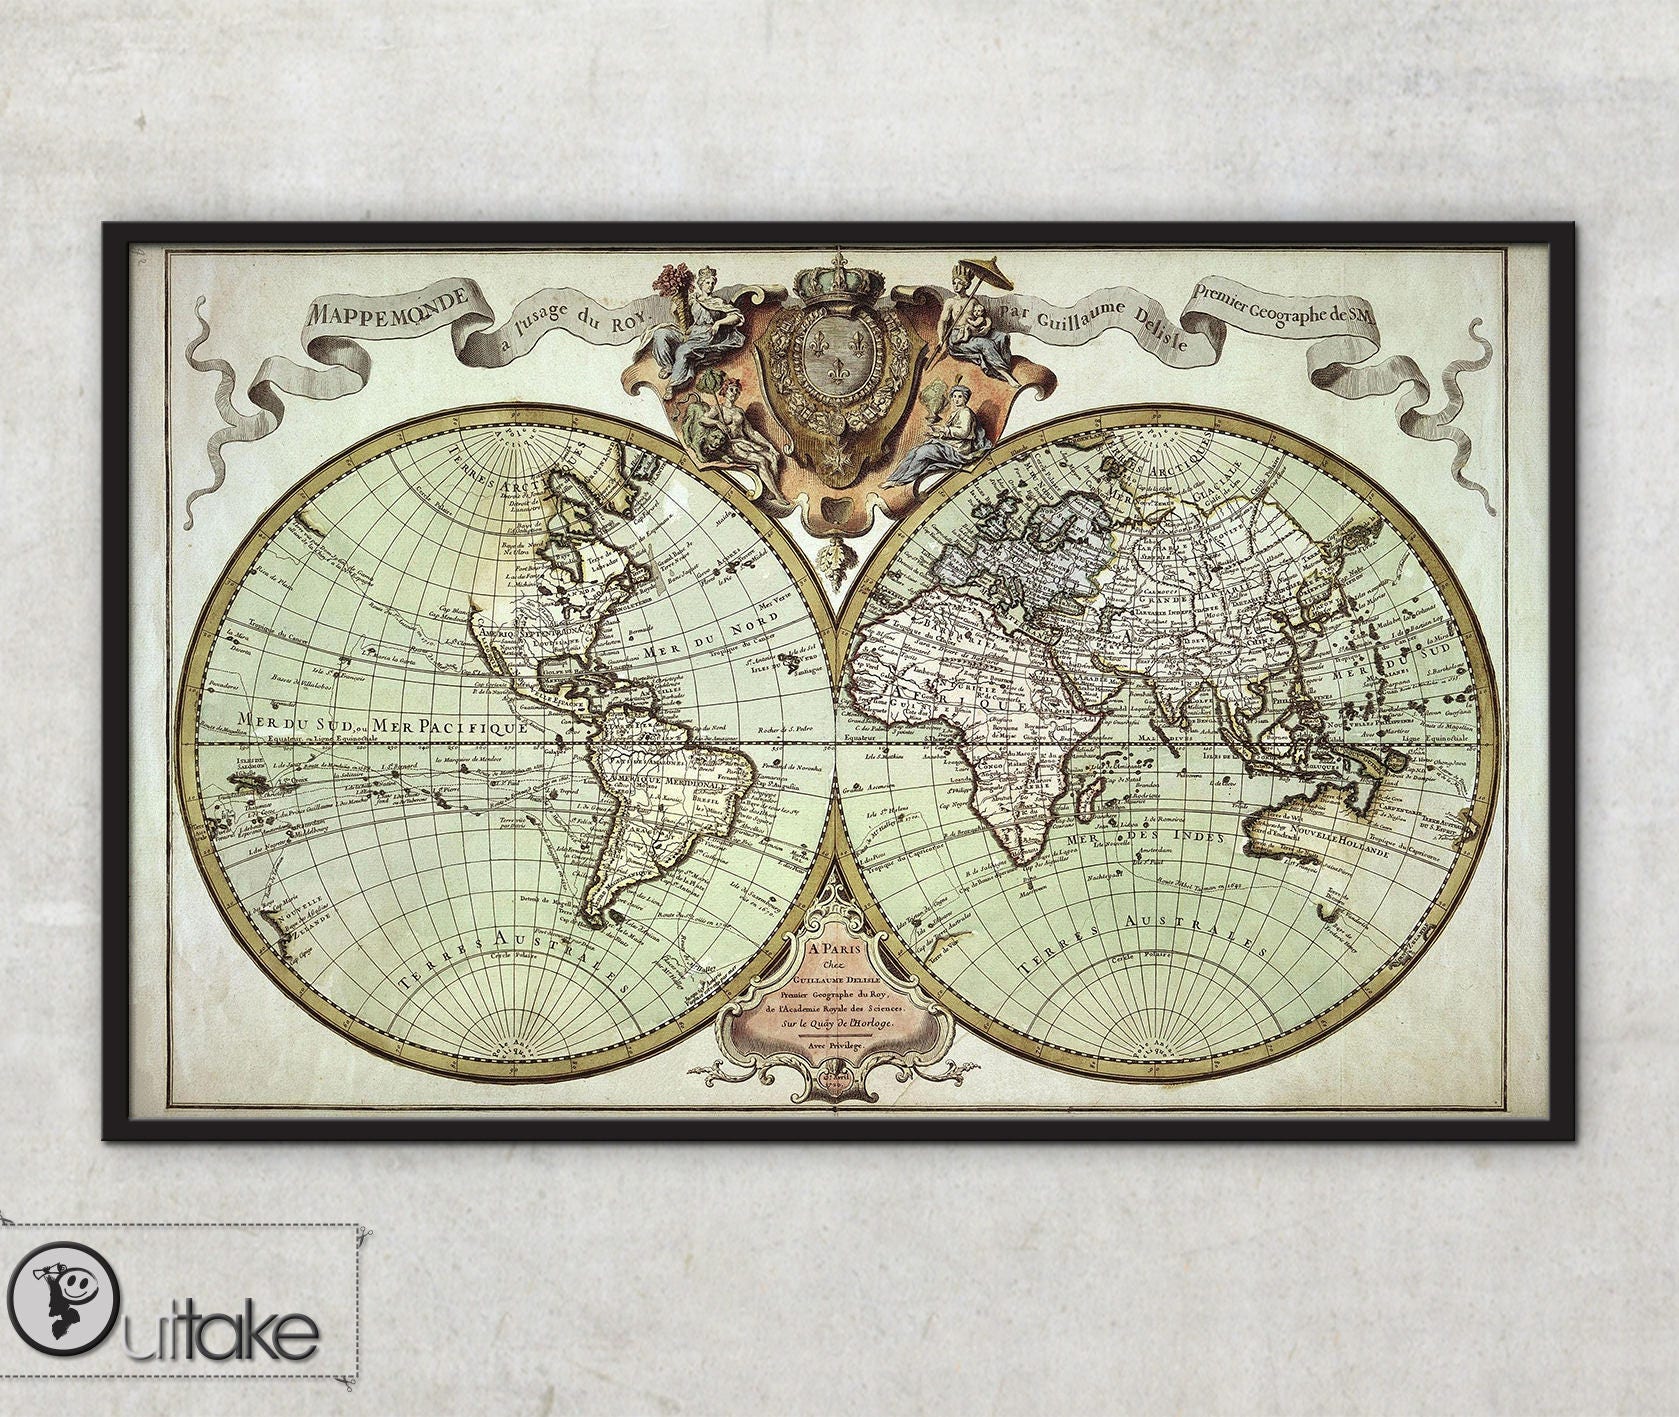 Poster mappemonde vintage Vintura : carte du monde géante | Scenolia